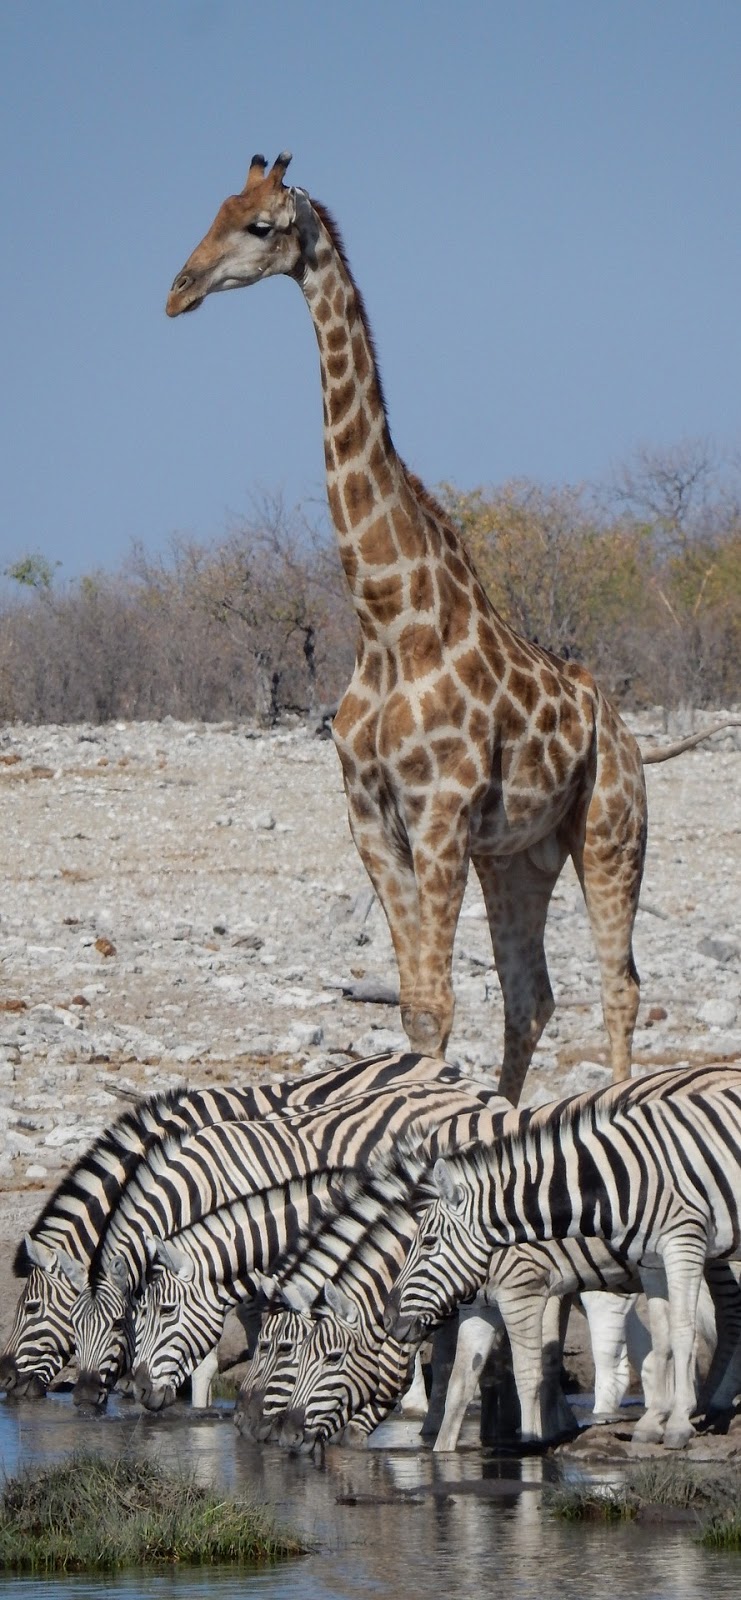 Drinking water is when a giraffe wishes he was a bit shorter.